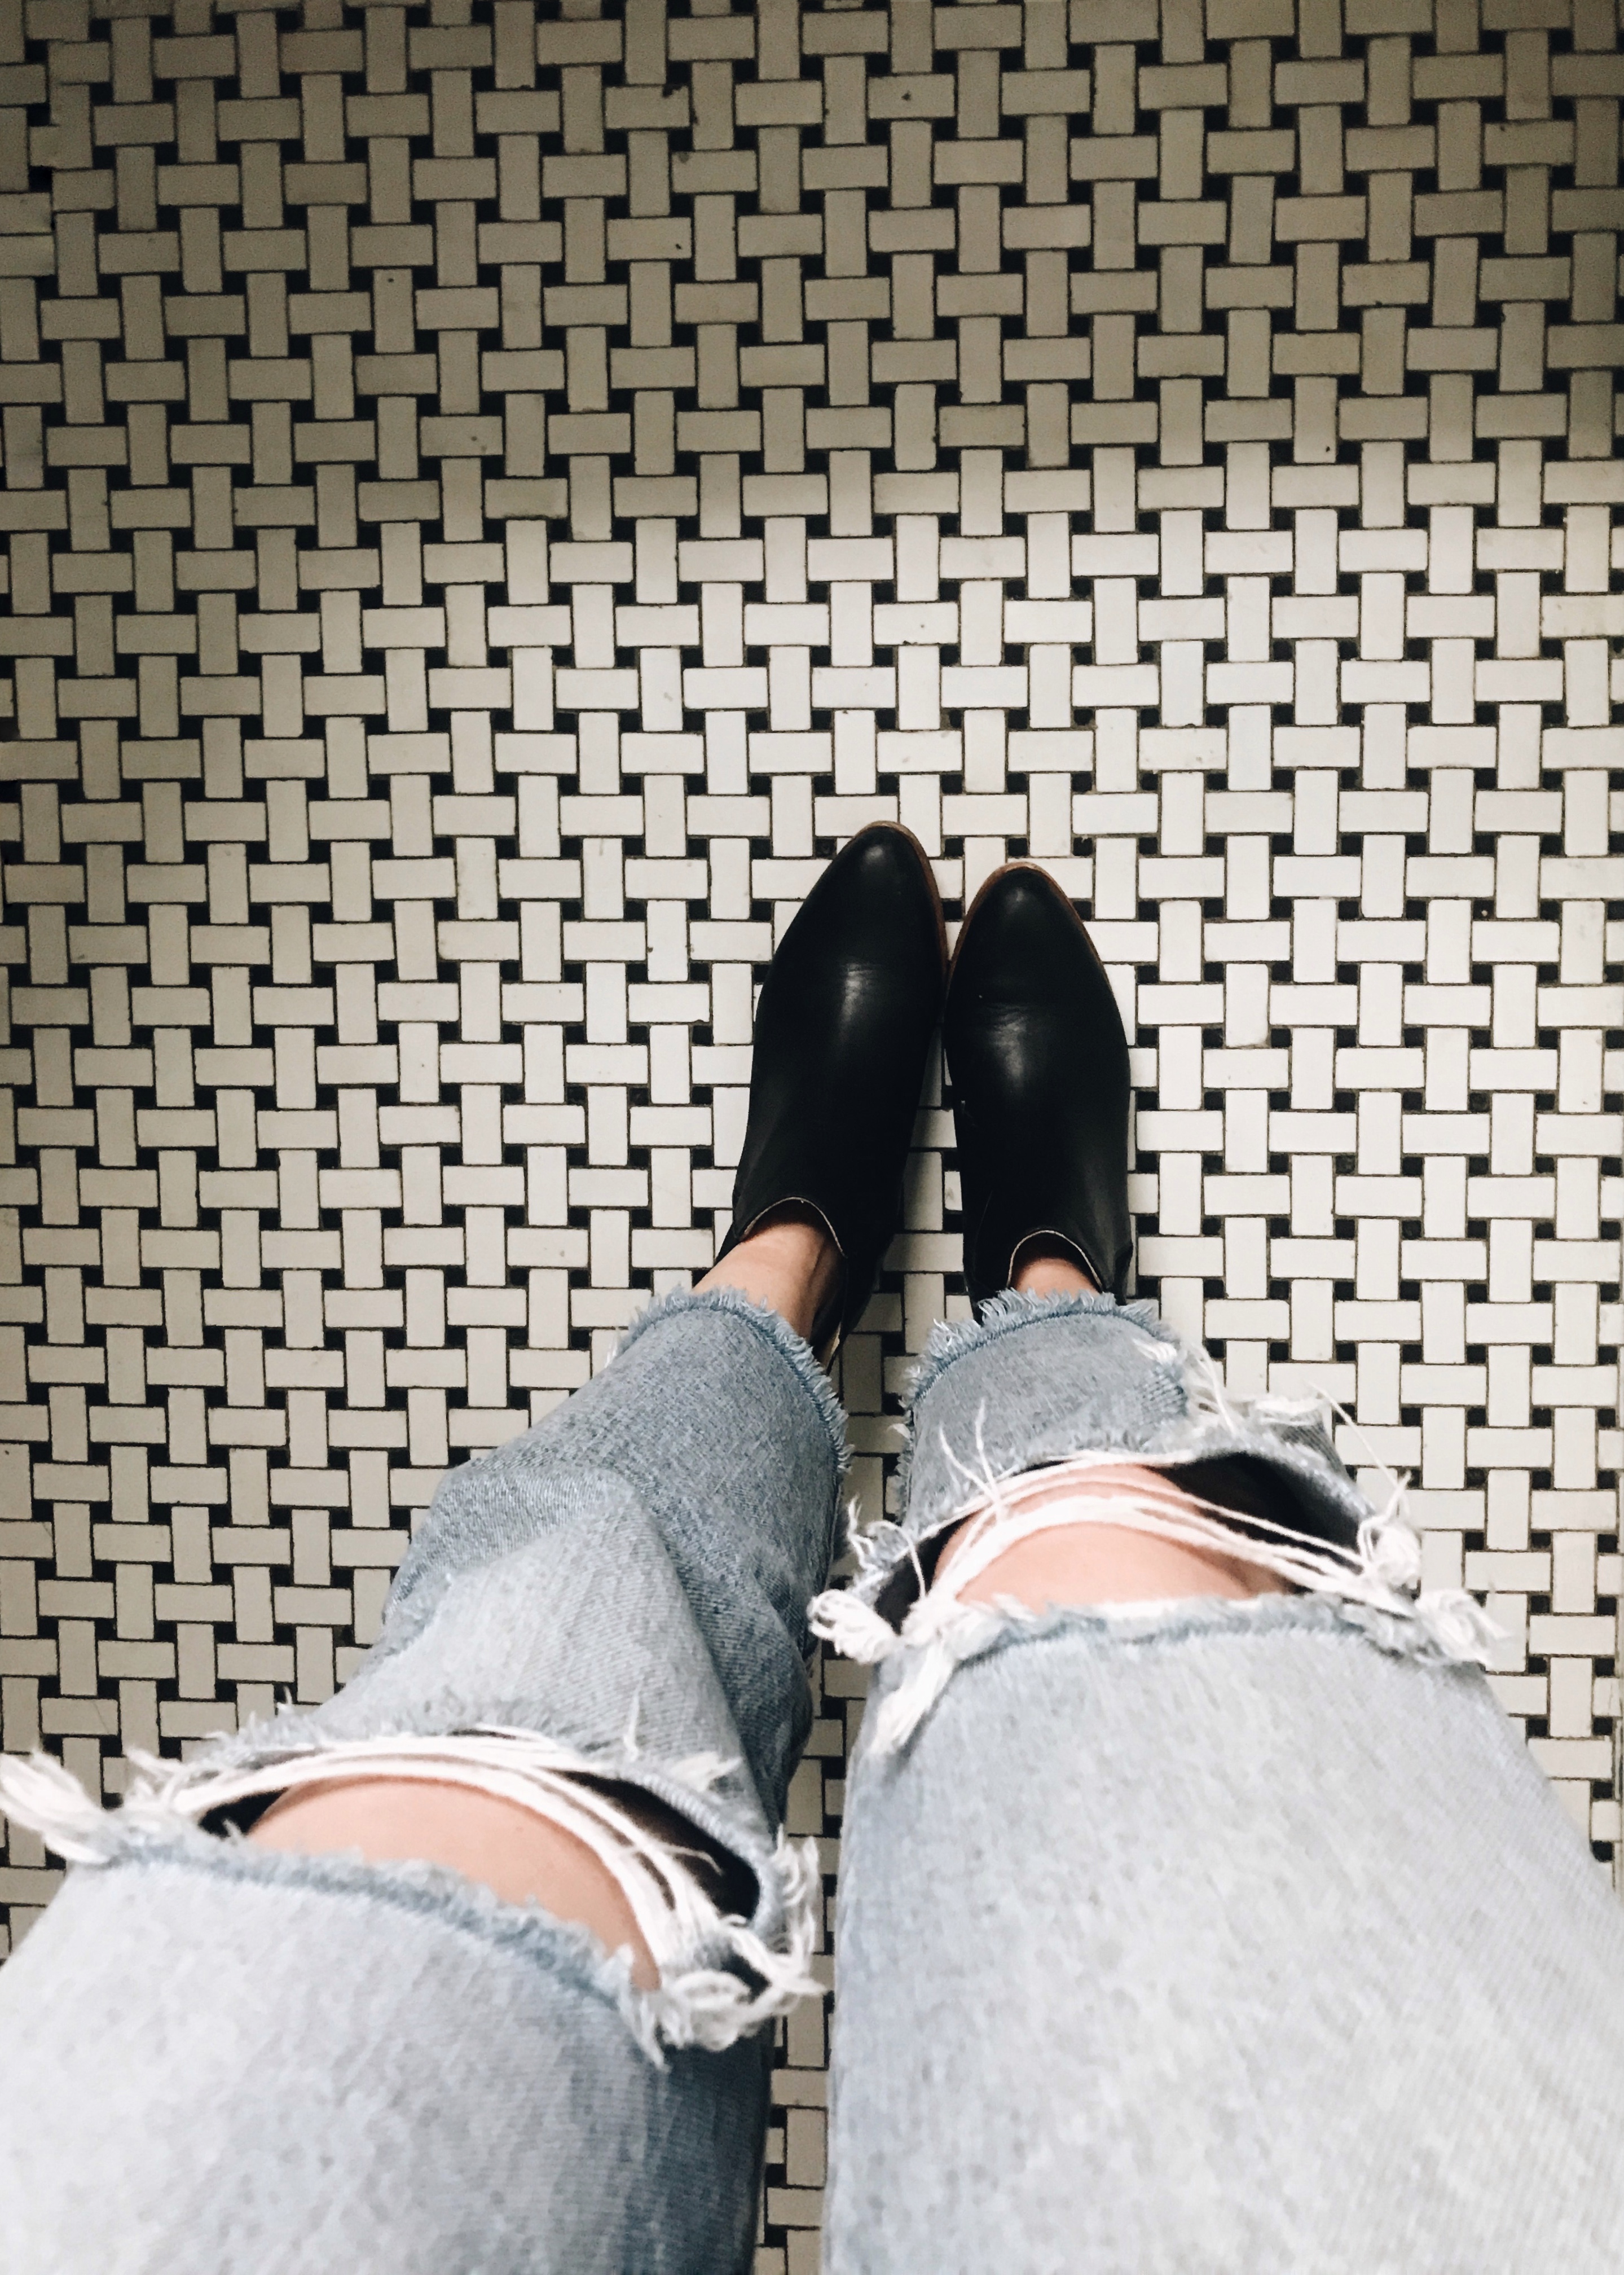 feet on tile